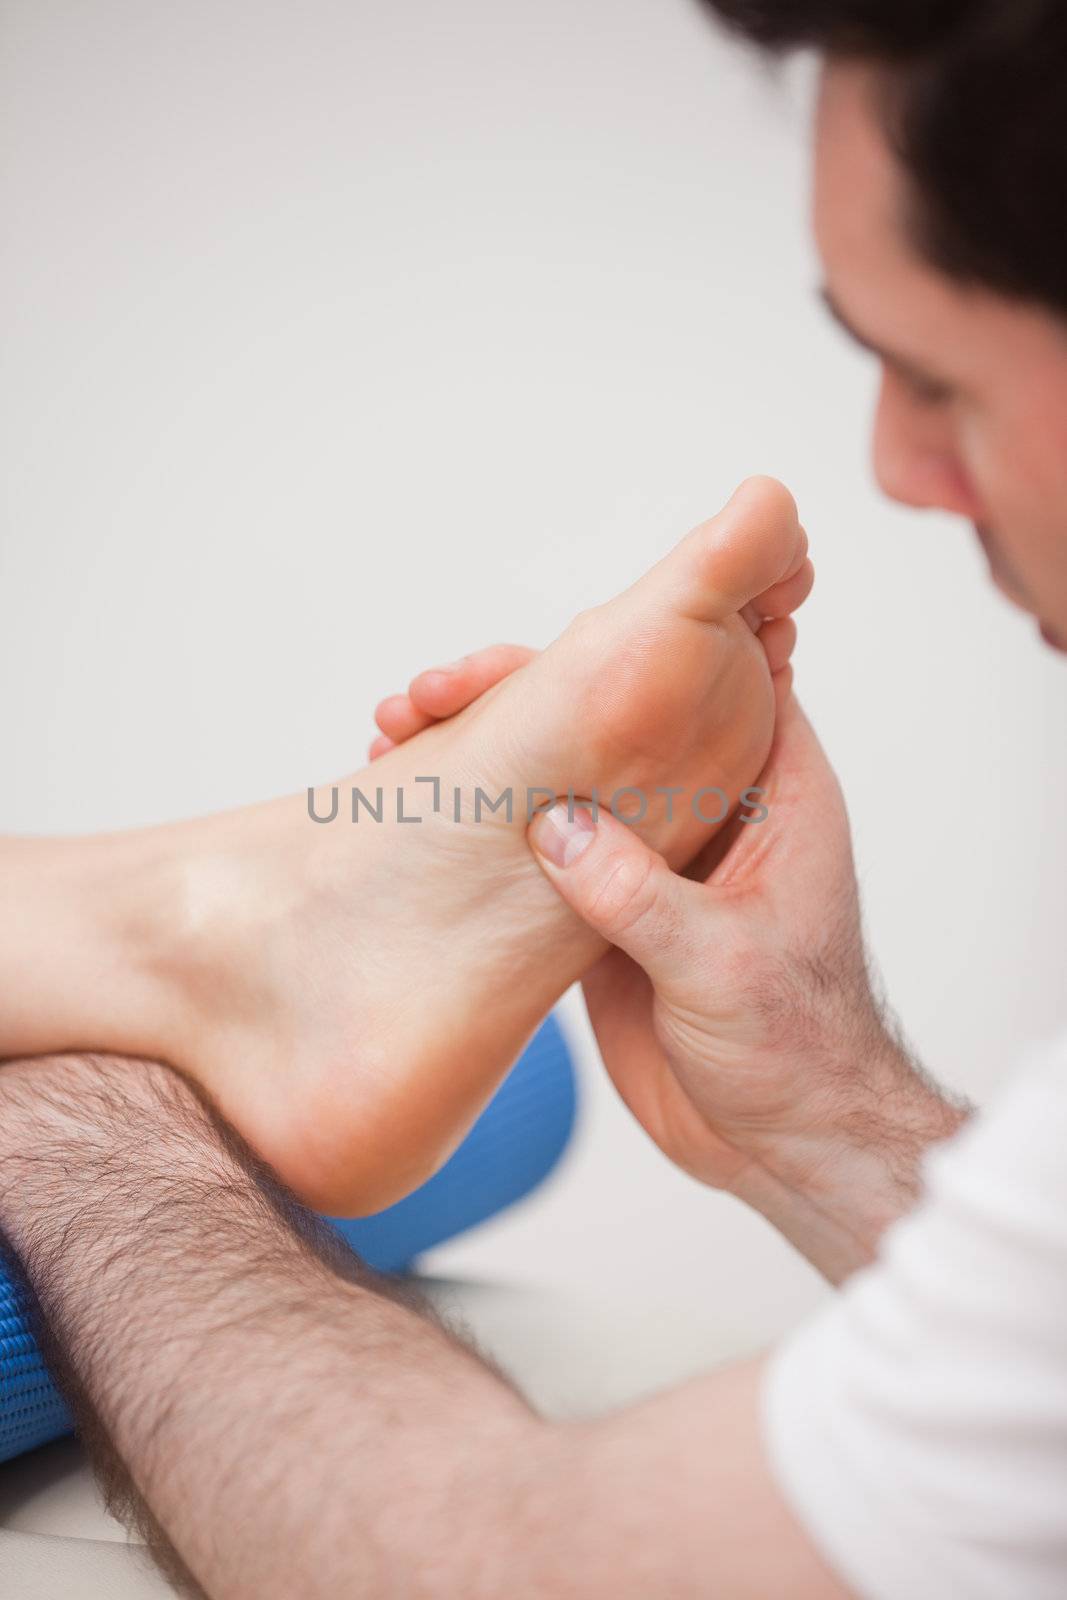 Reflexologist massaging the foot of his patient by Wavebreakmedia